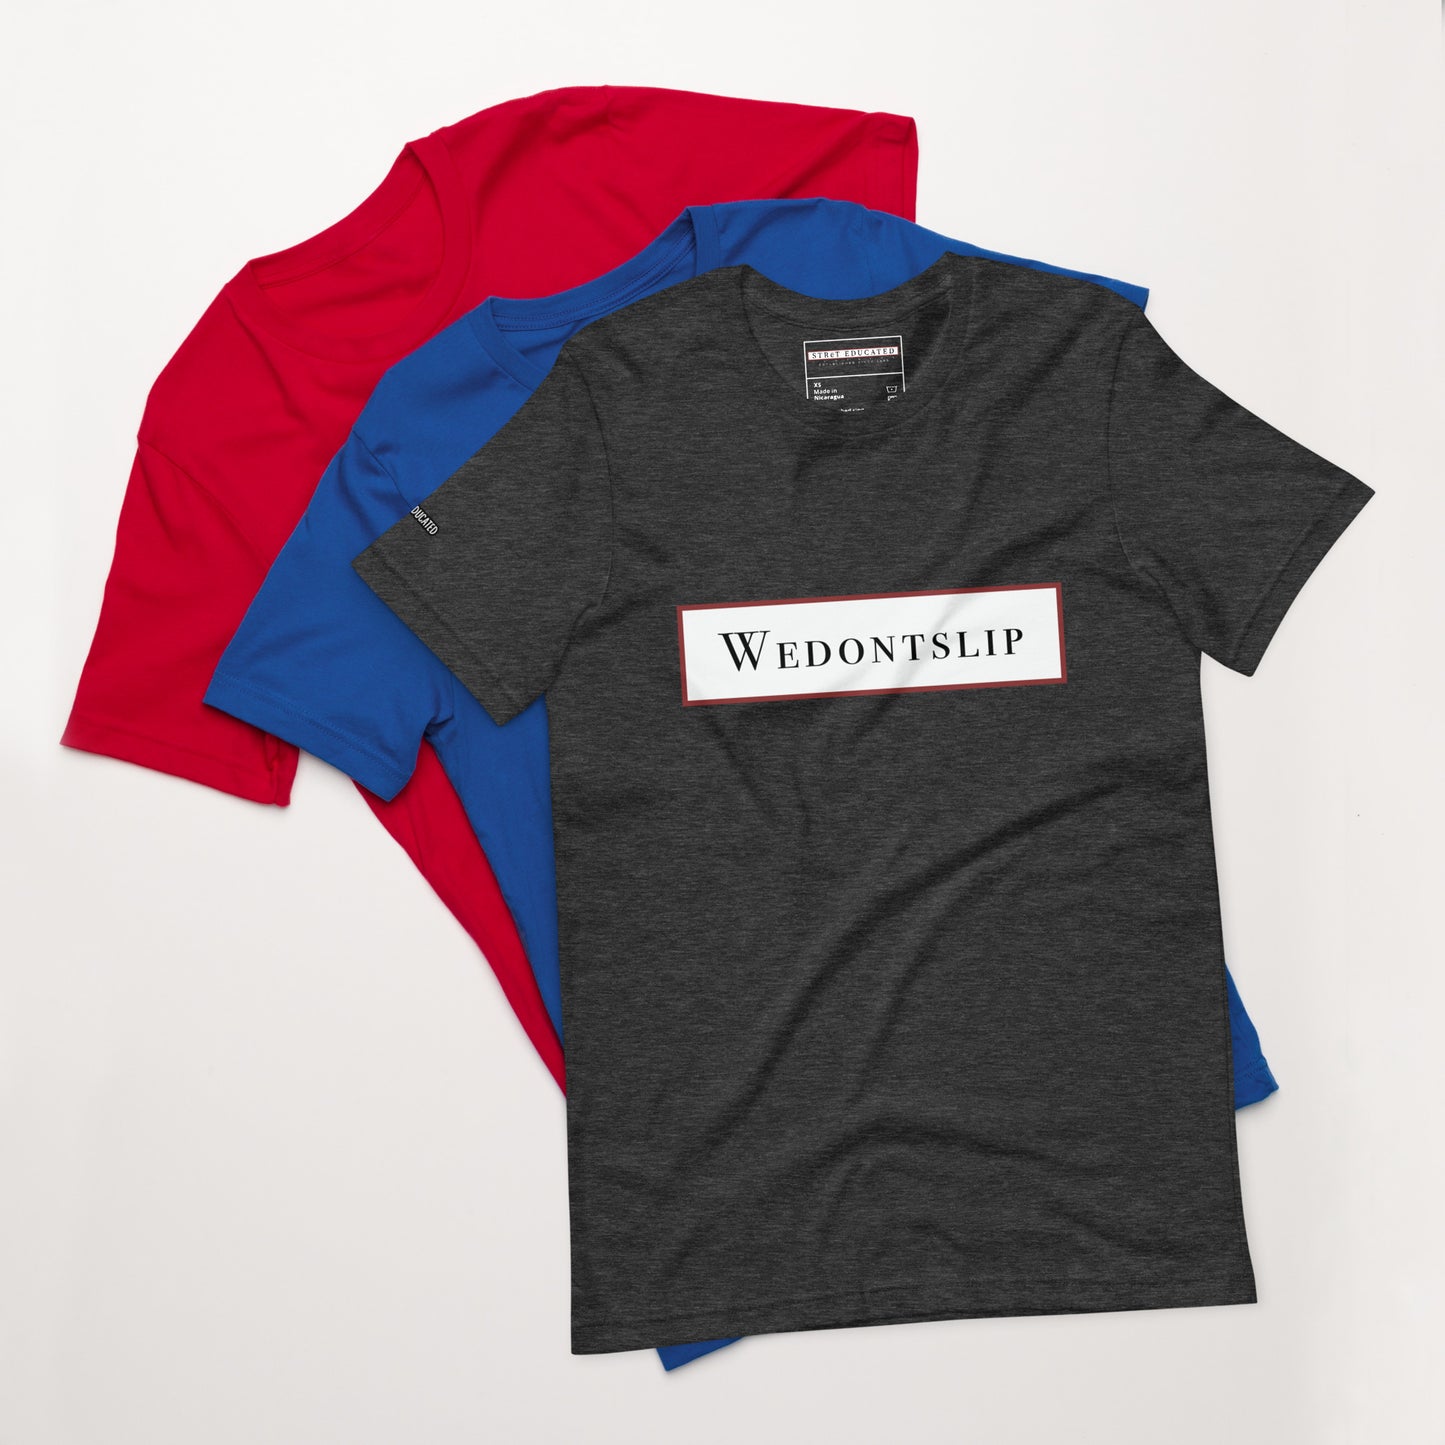 Wedontslip T-shirt